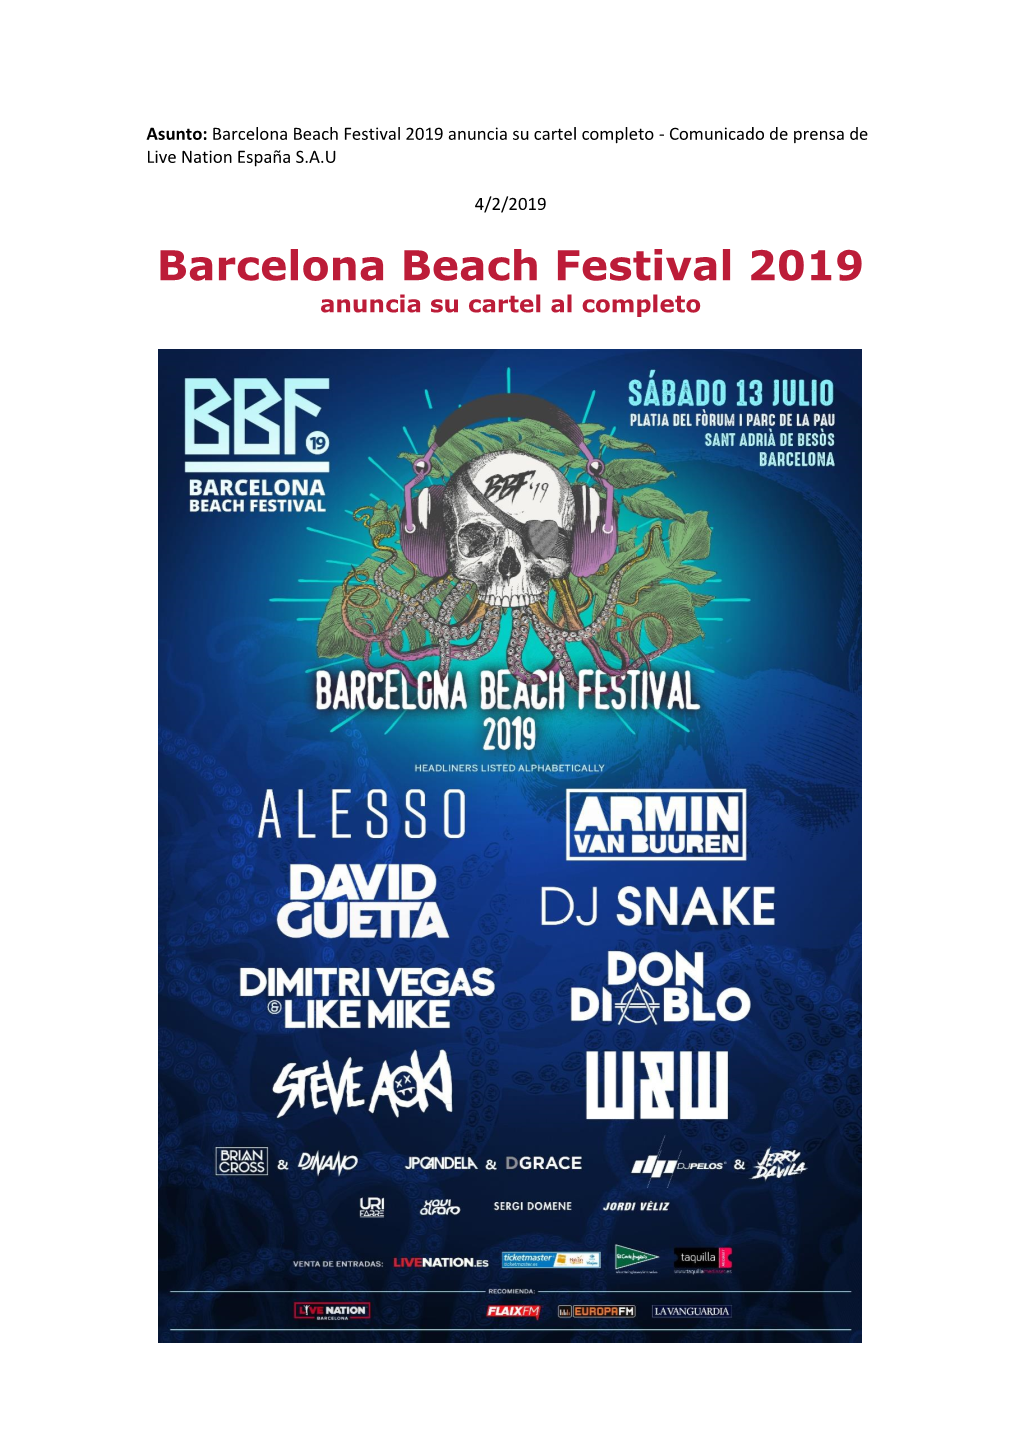 Barcelona Beach Festival 2019 Anuncia Su Cartel Completo - Comunicado De Prensa De Live Nation España S.A.U